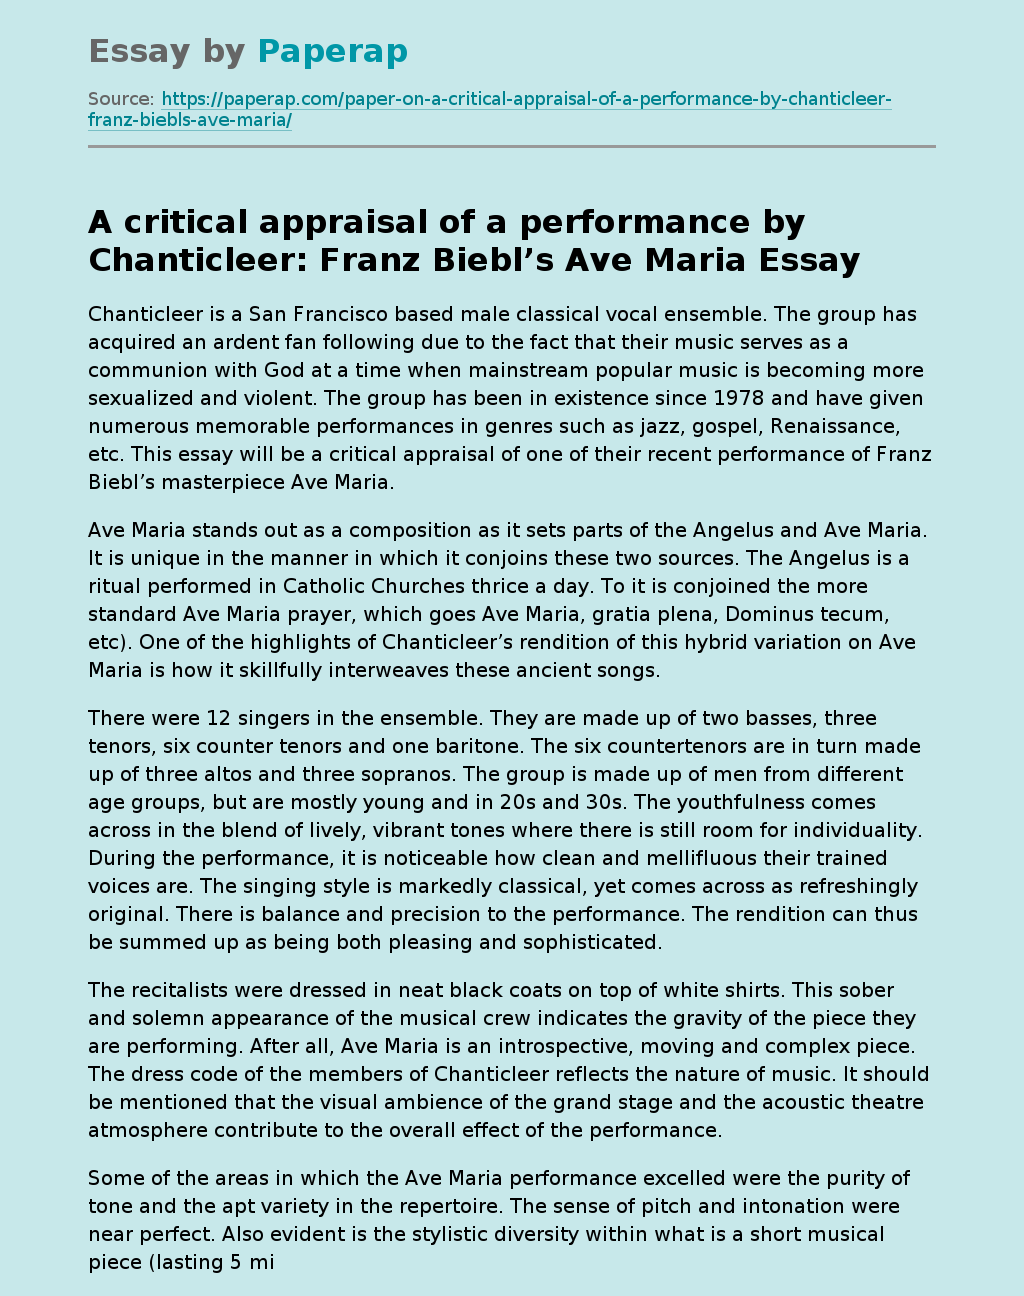 A Critical Appraisal Of A Performance By Chanticleer: Franz Biebl’s Ave Maria